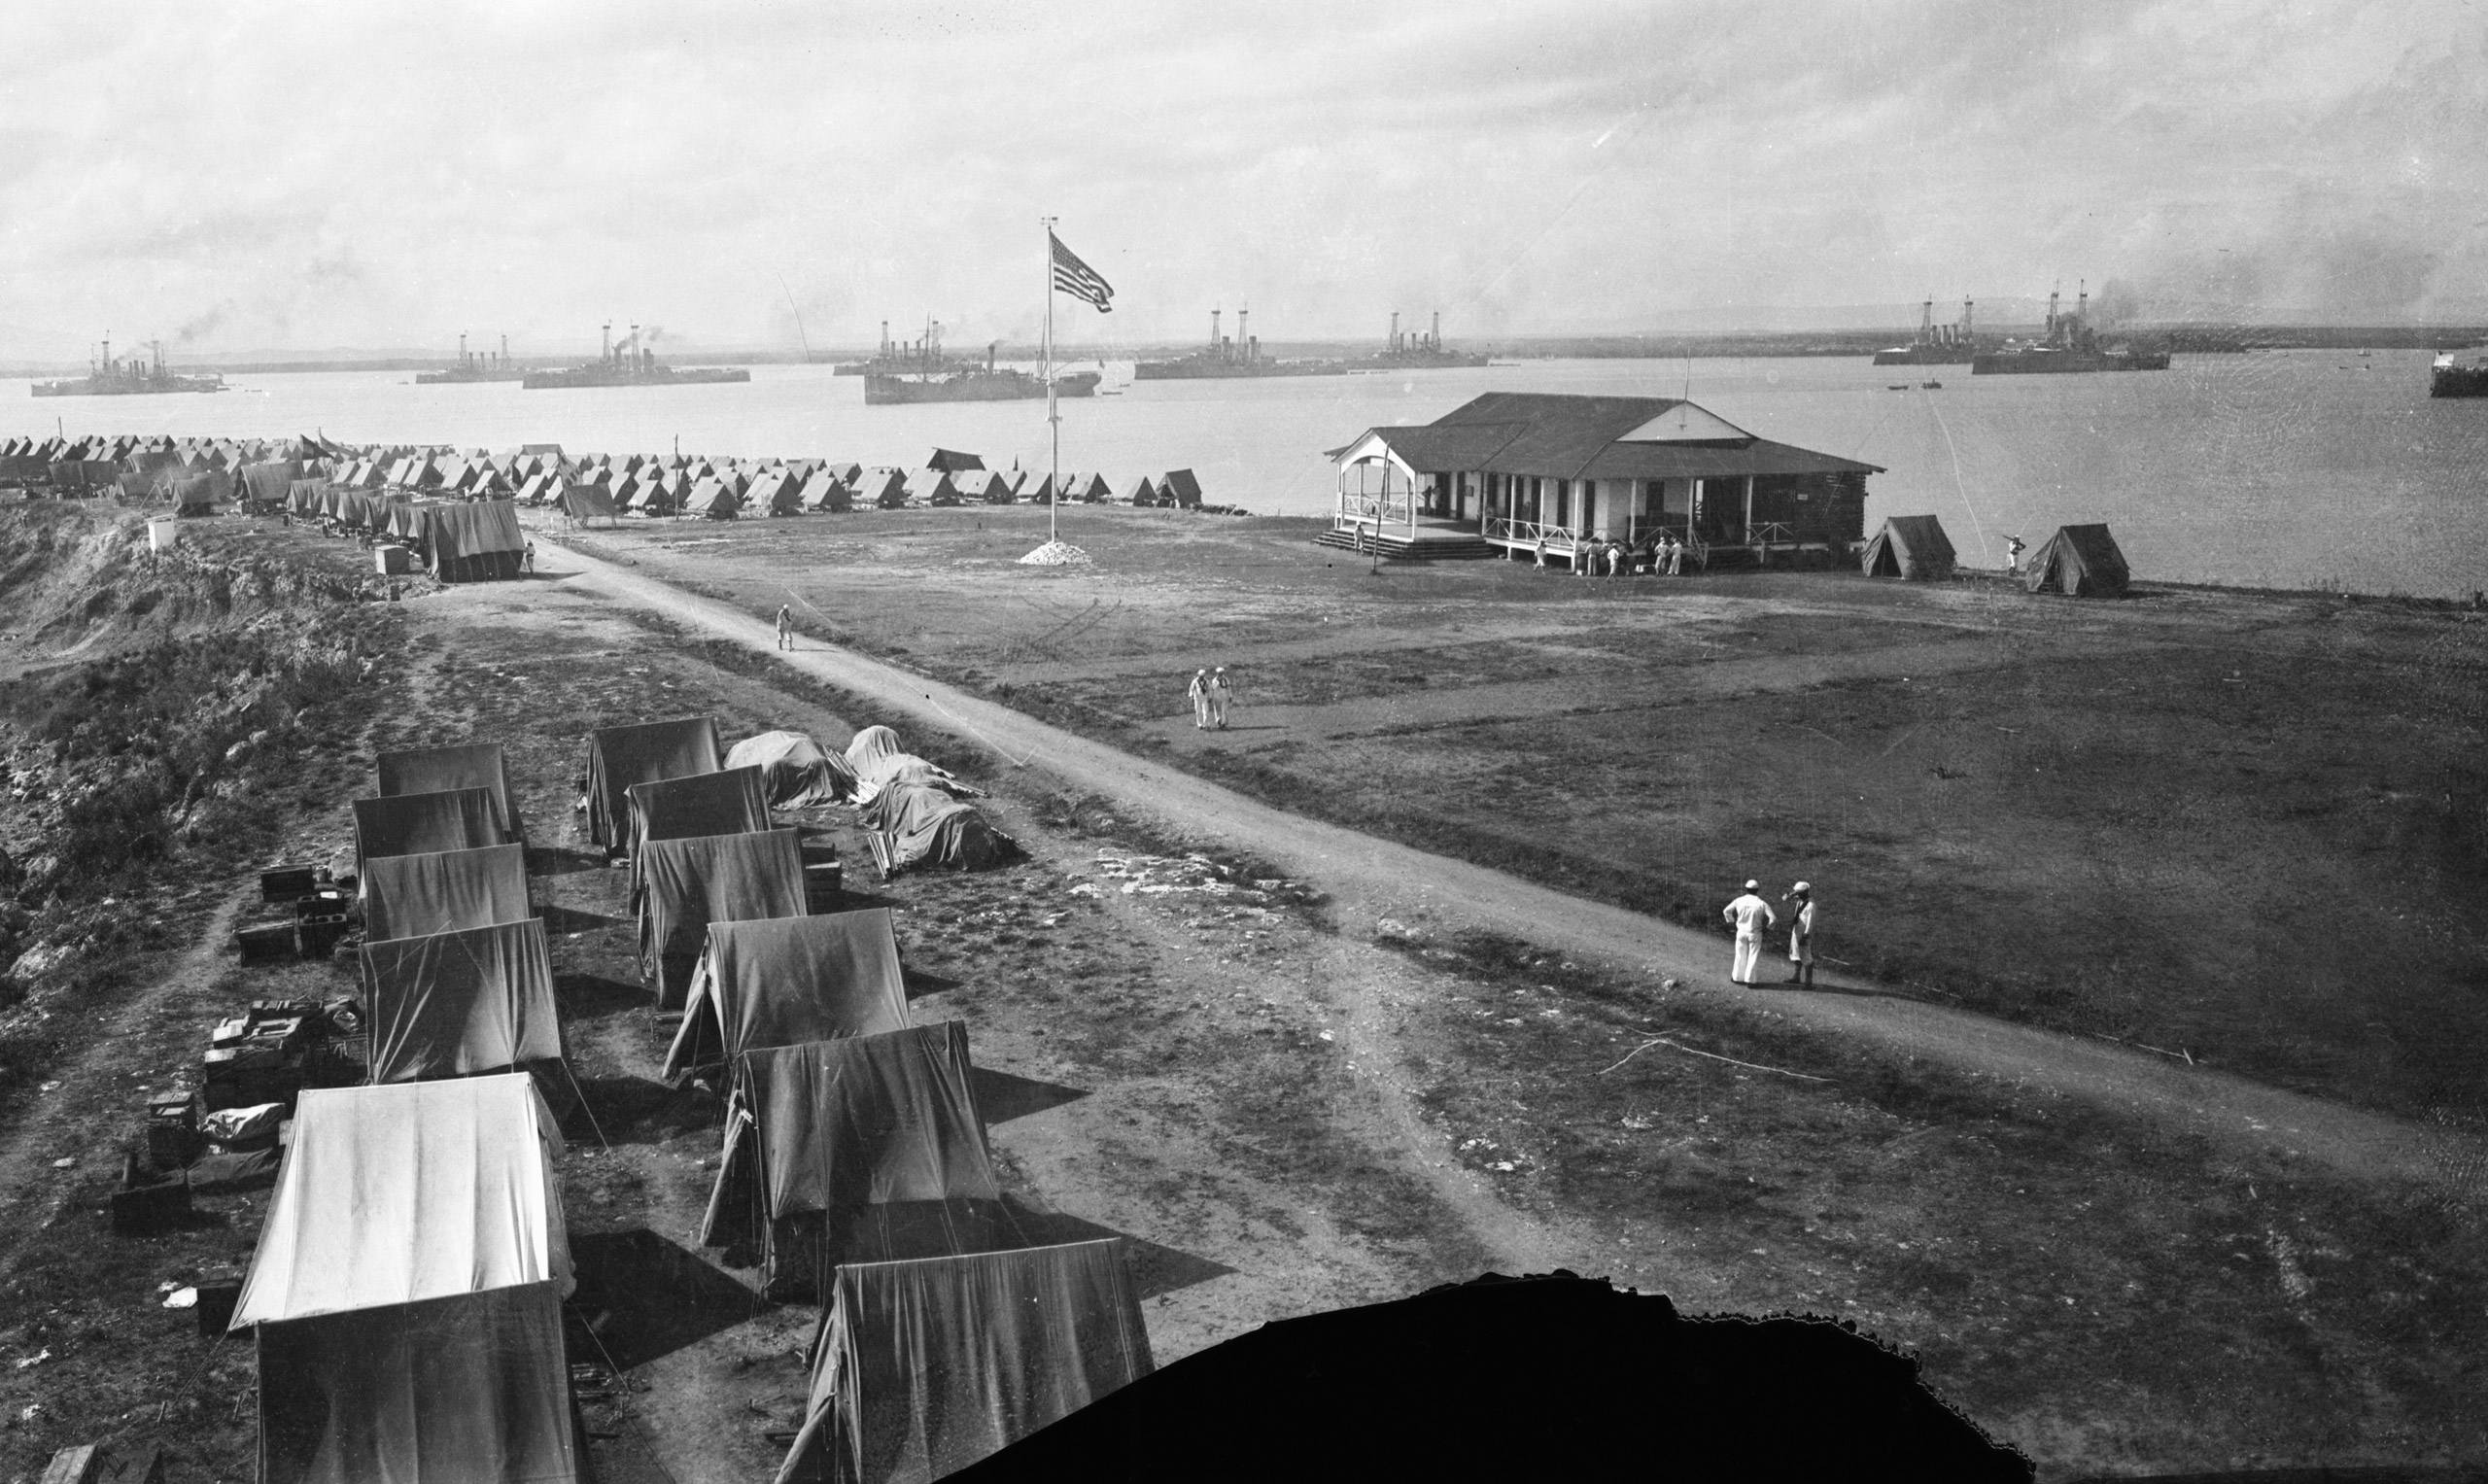 The U.S. military camping at Deer Point in Guantanamo Bay, Cuba. 1923.